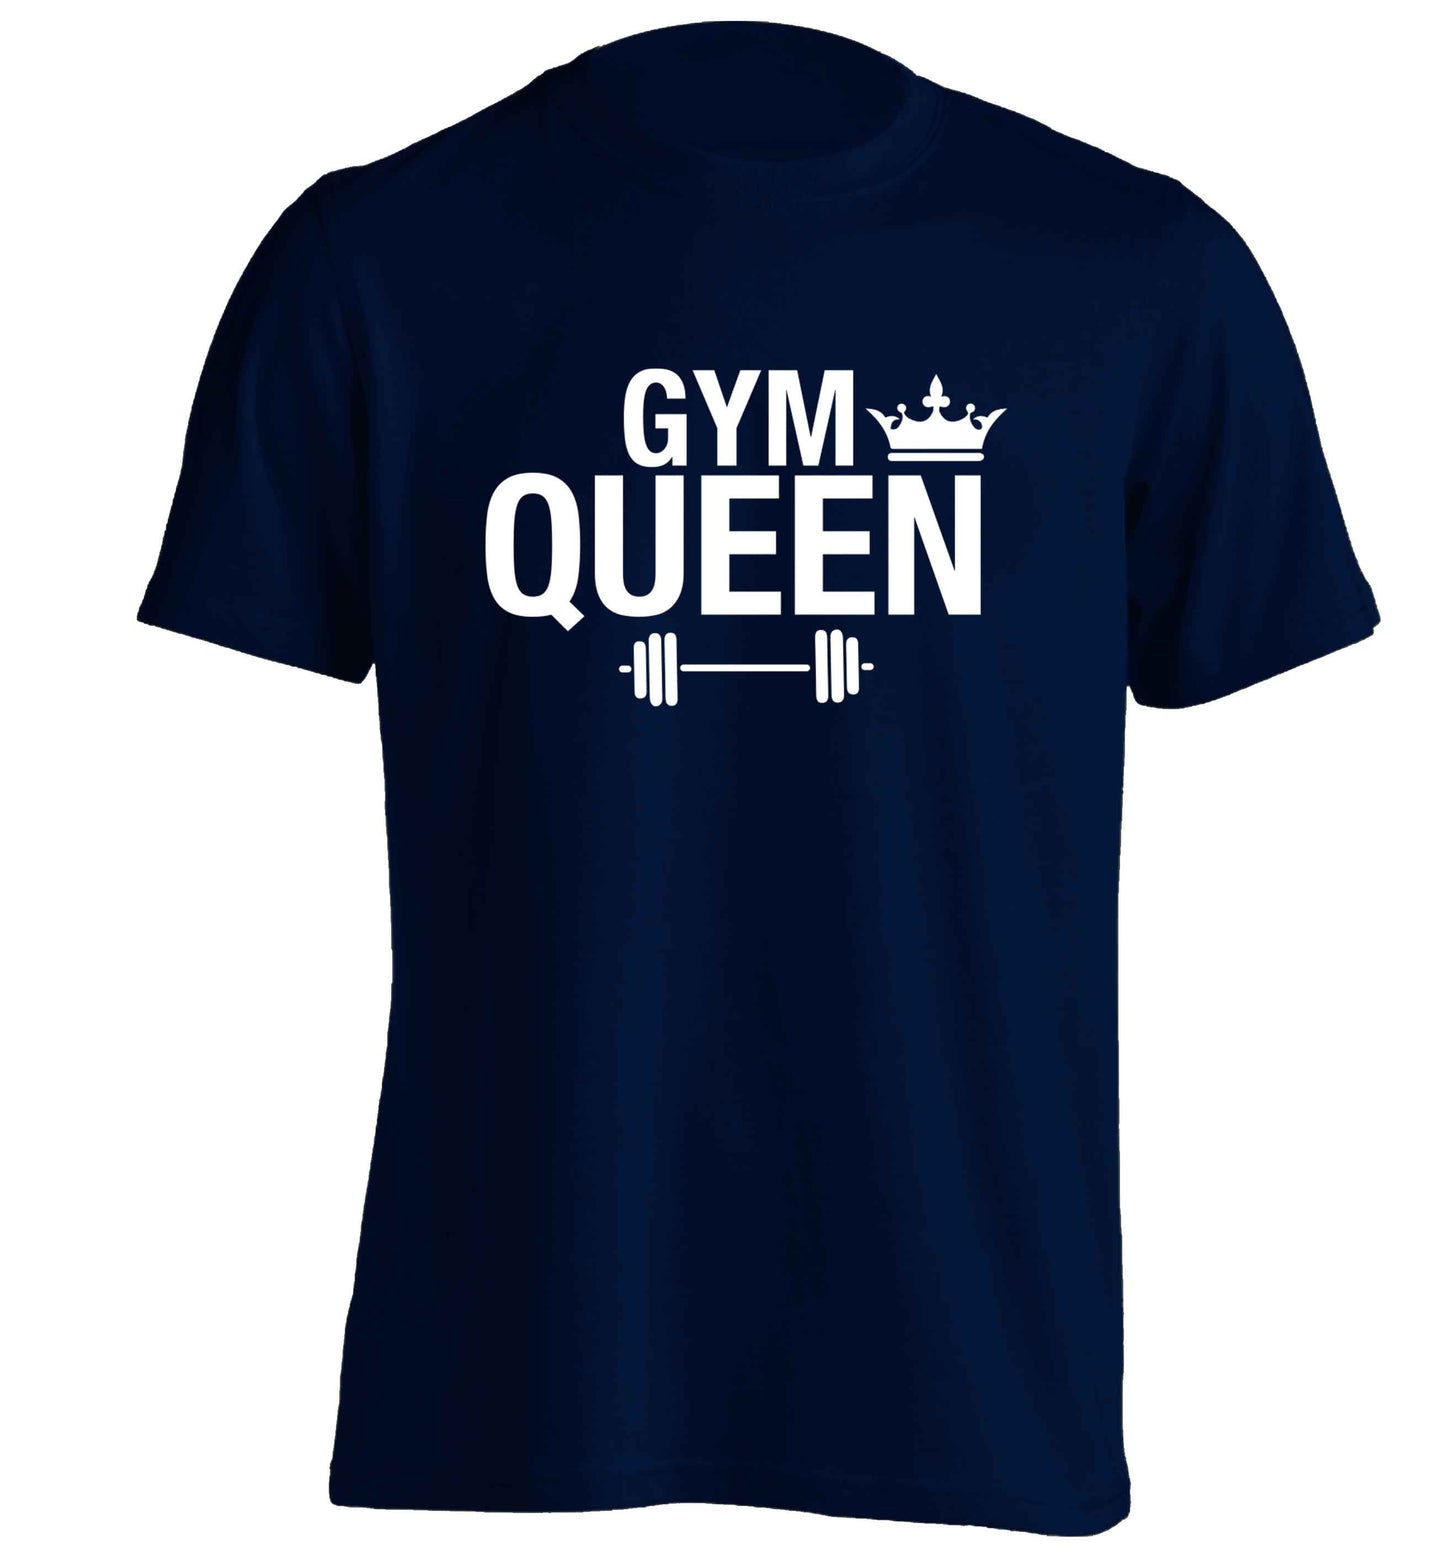 Gym queen adults unisex navy Tshirt 2XL